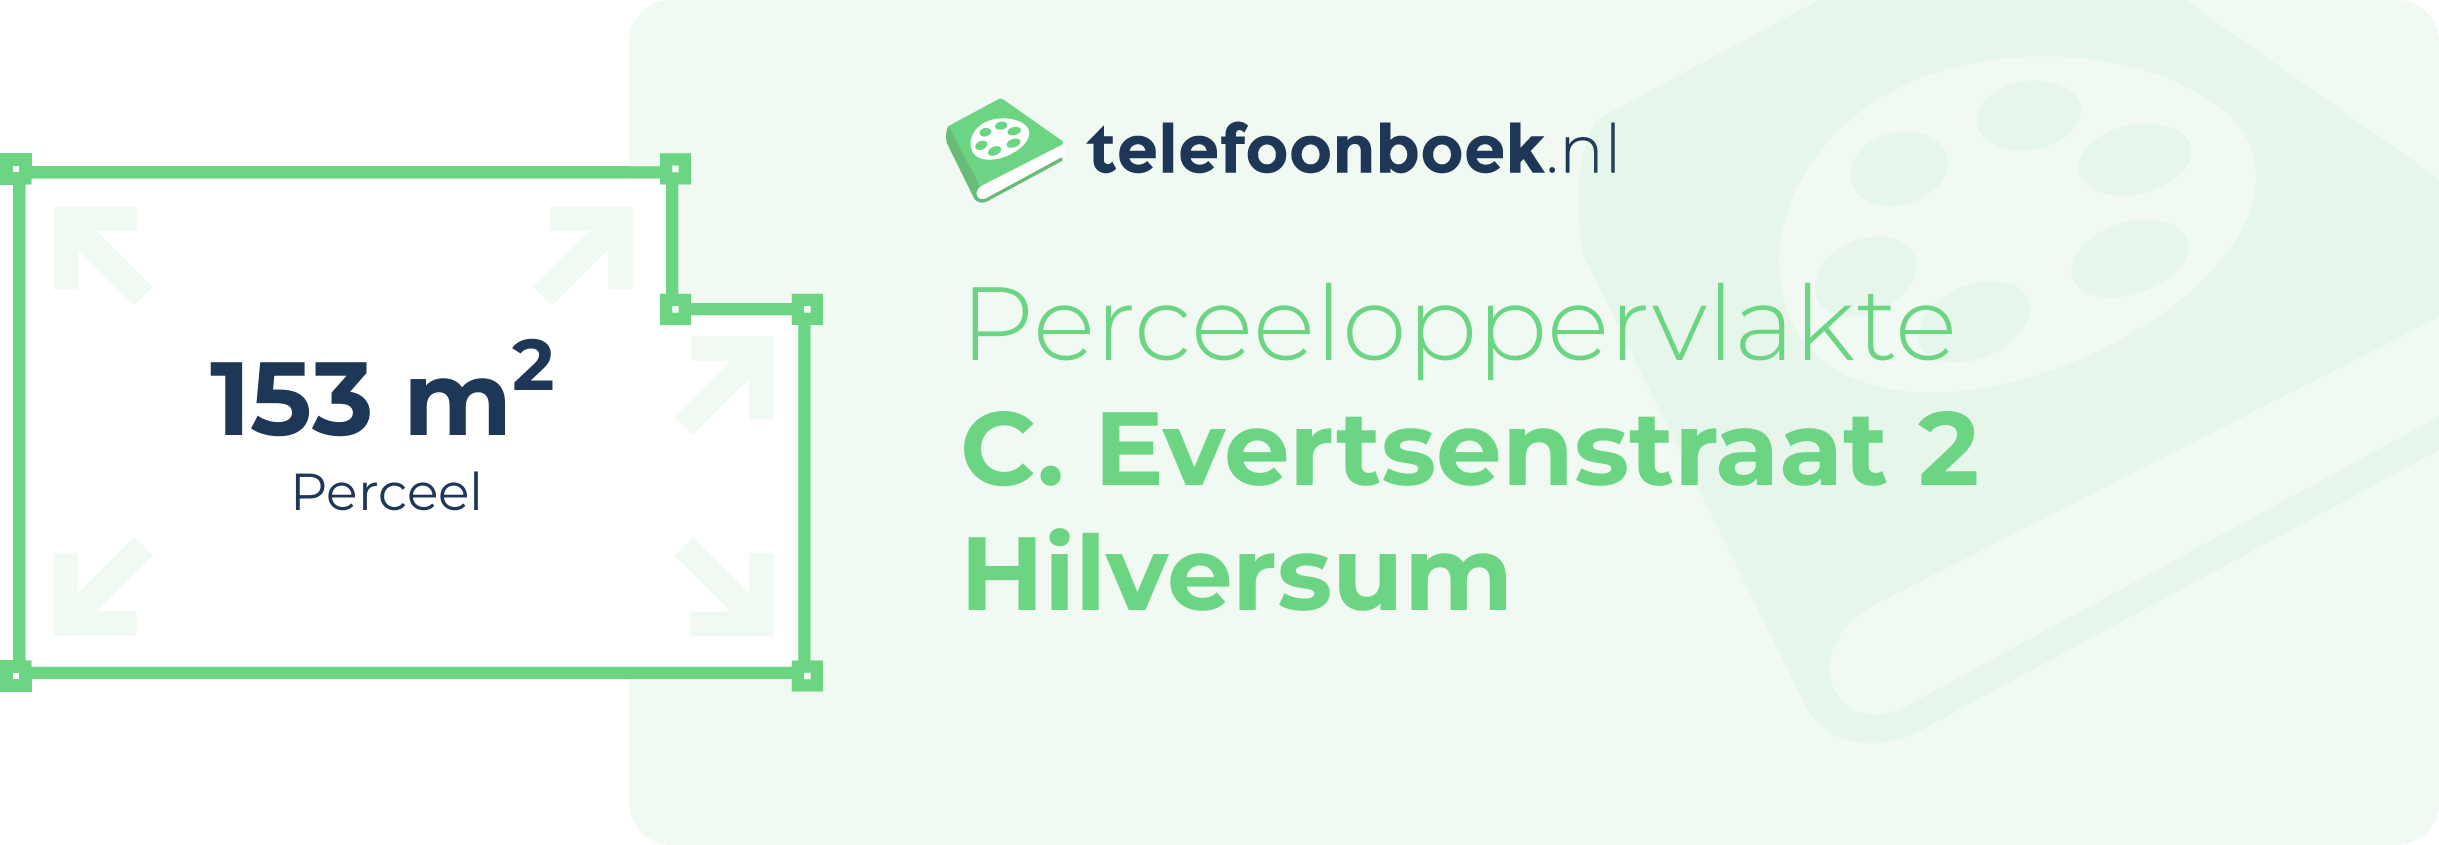 Perceeloppervlakte C. Evertsenstraat 2 Hilversum